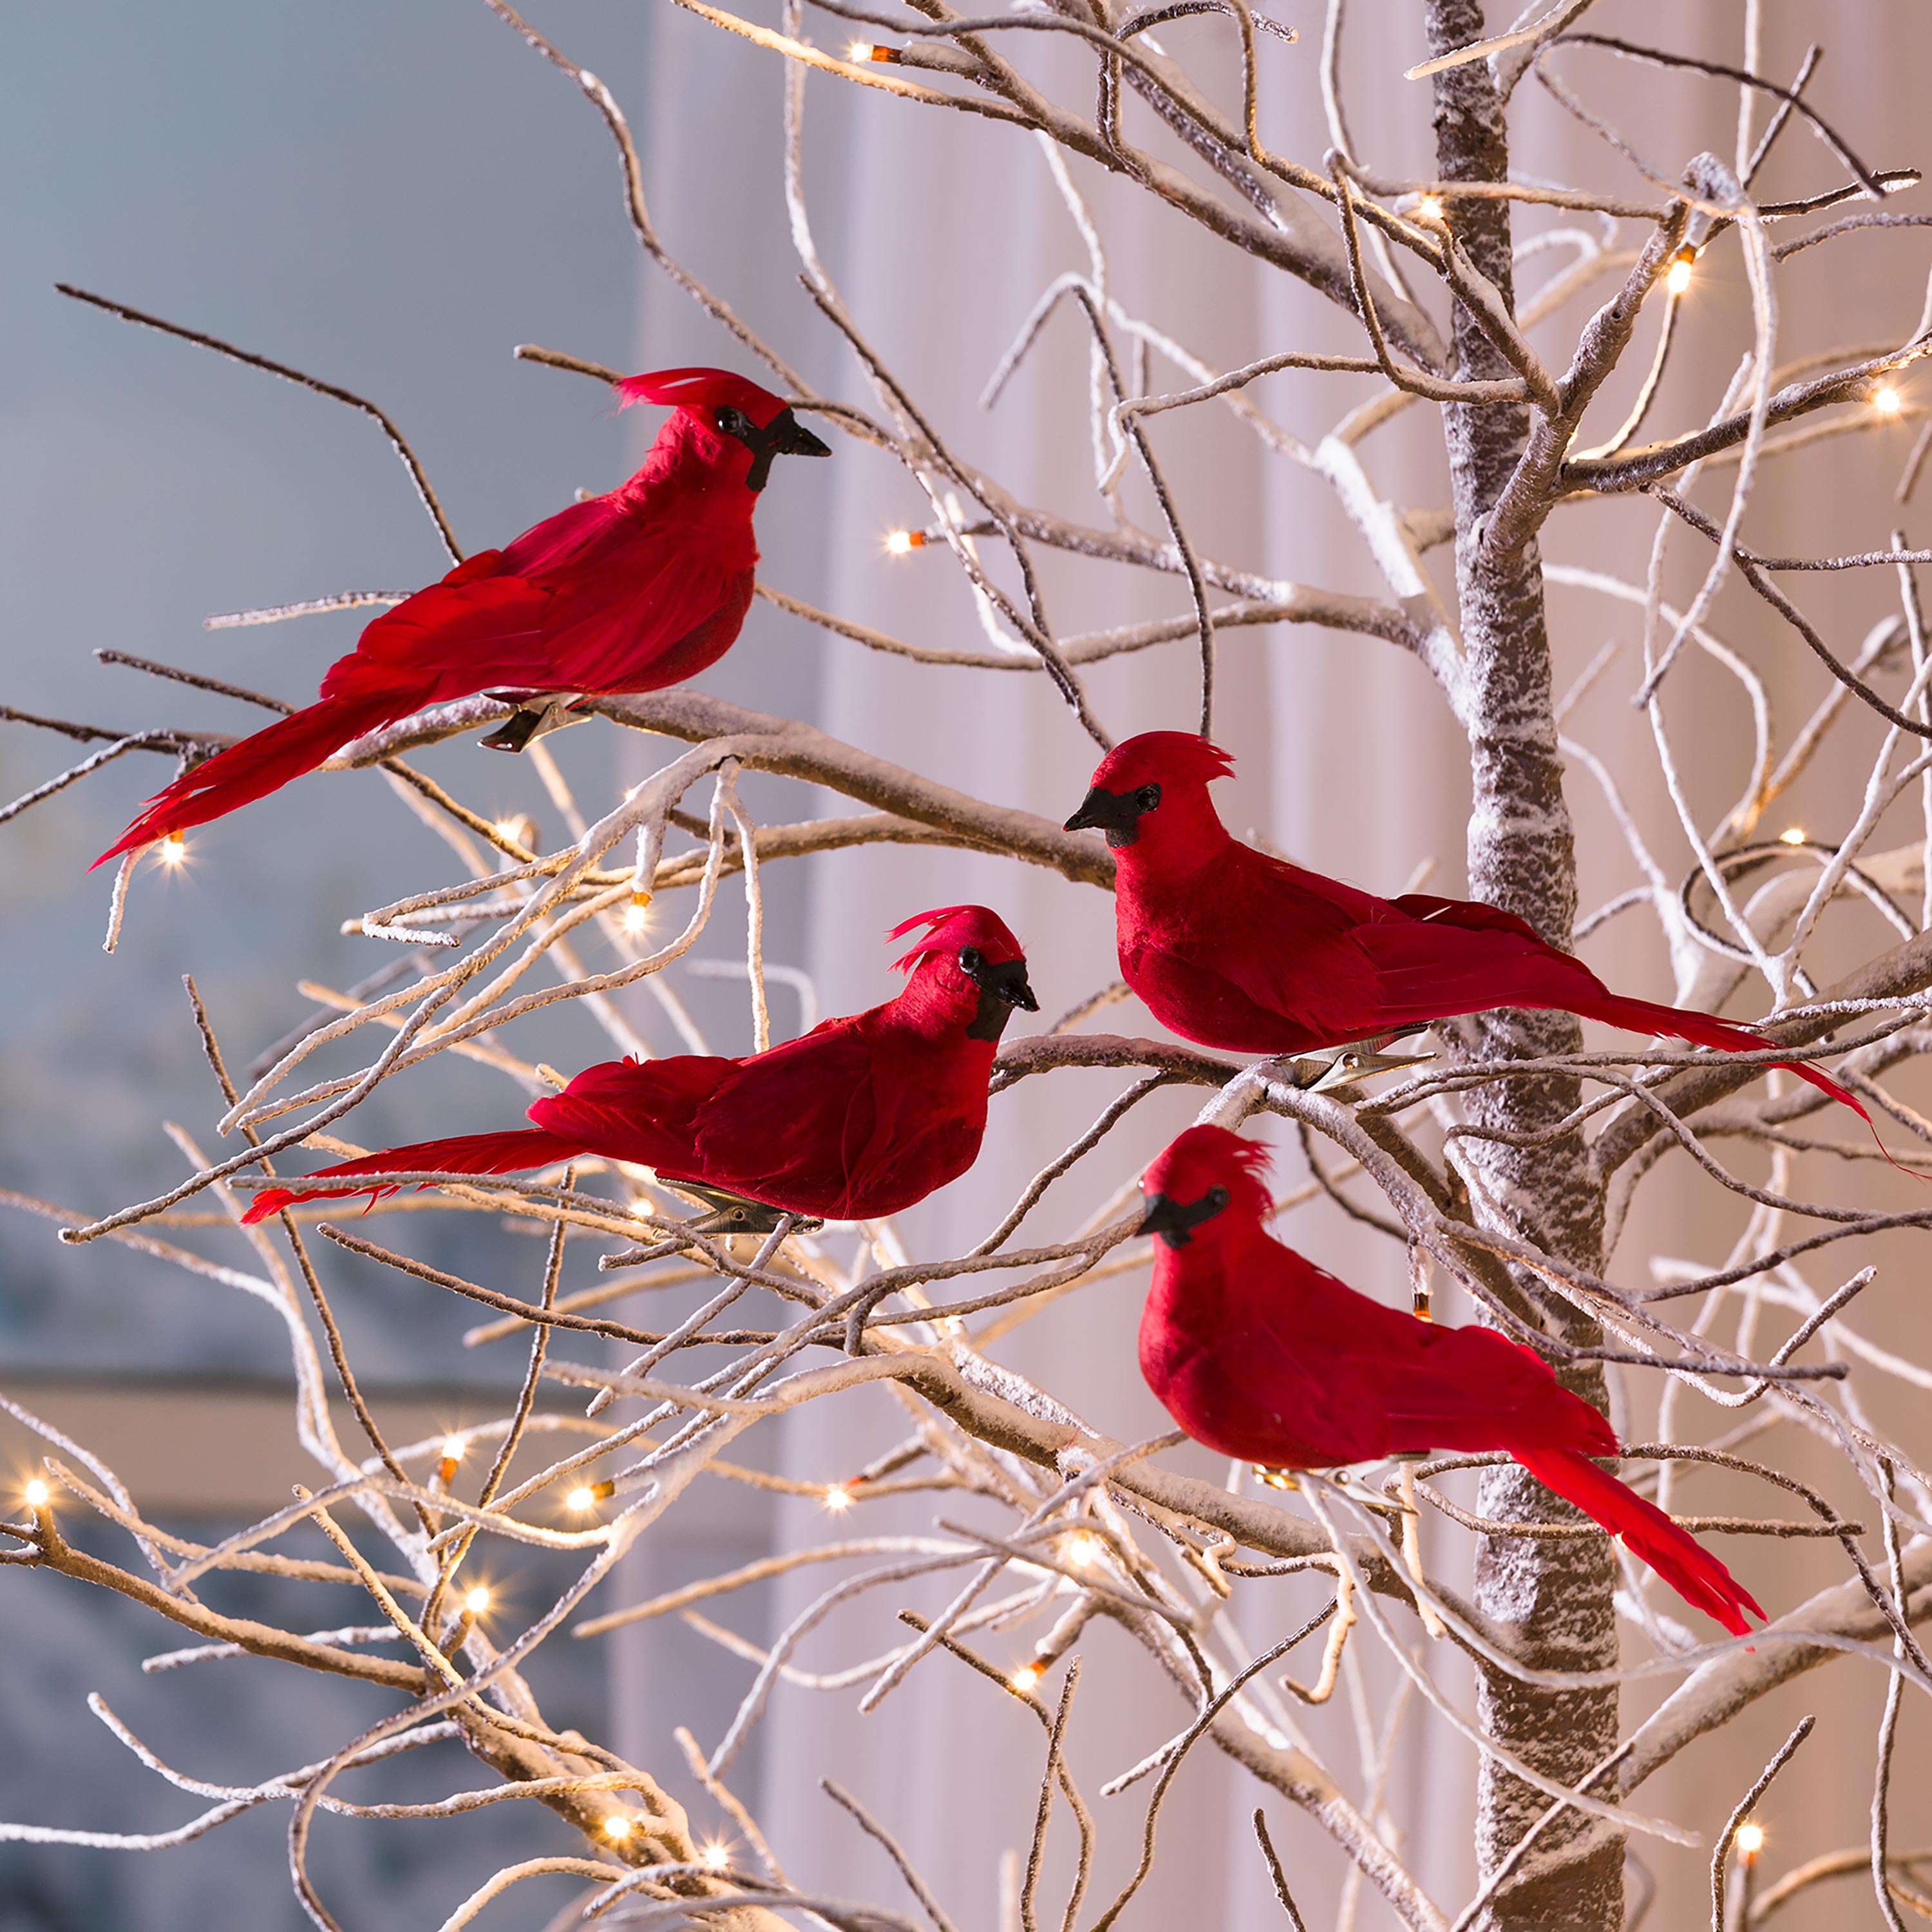 Clip-On Cardinal Christmas Tree Ornaments, Set of 4